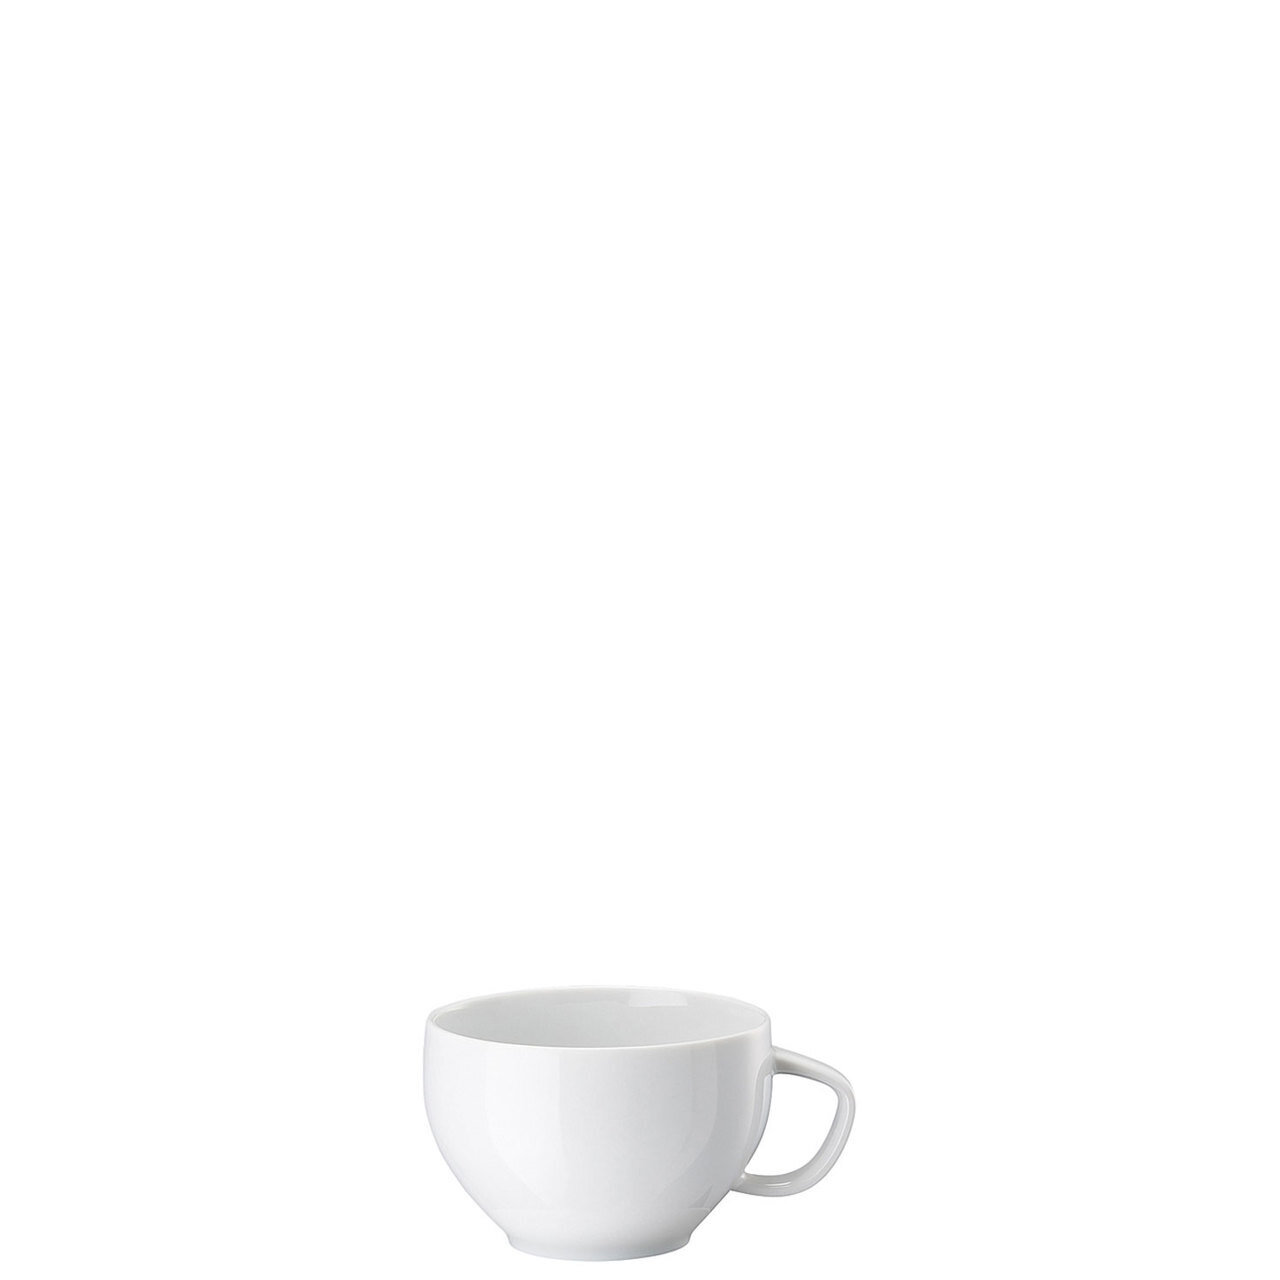 Rosenthal Junto White Tea Cup 8 oz